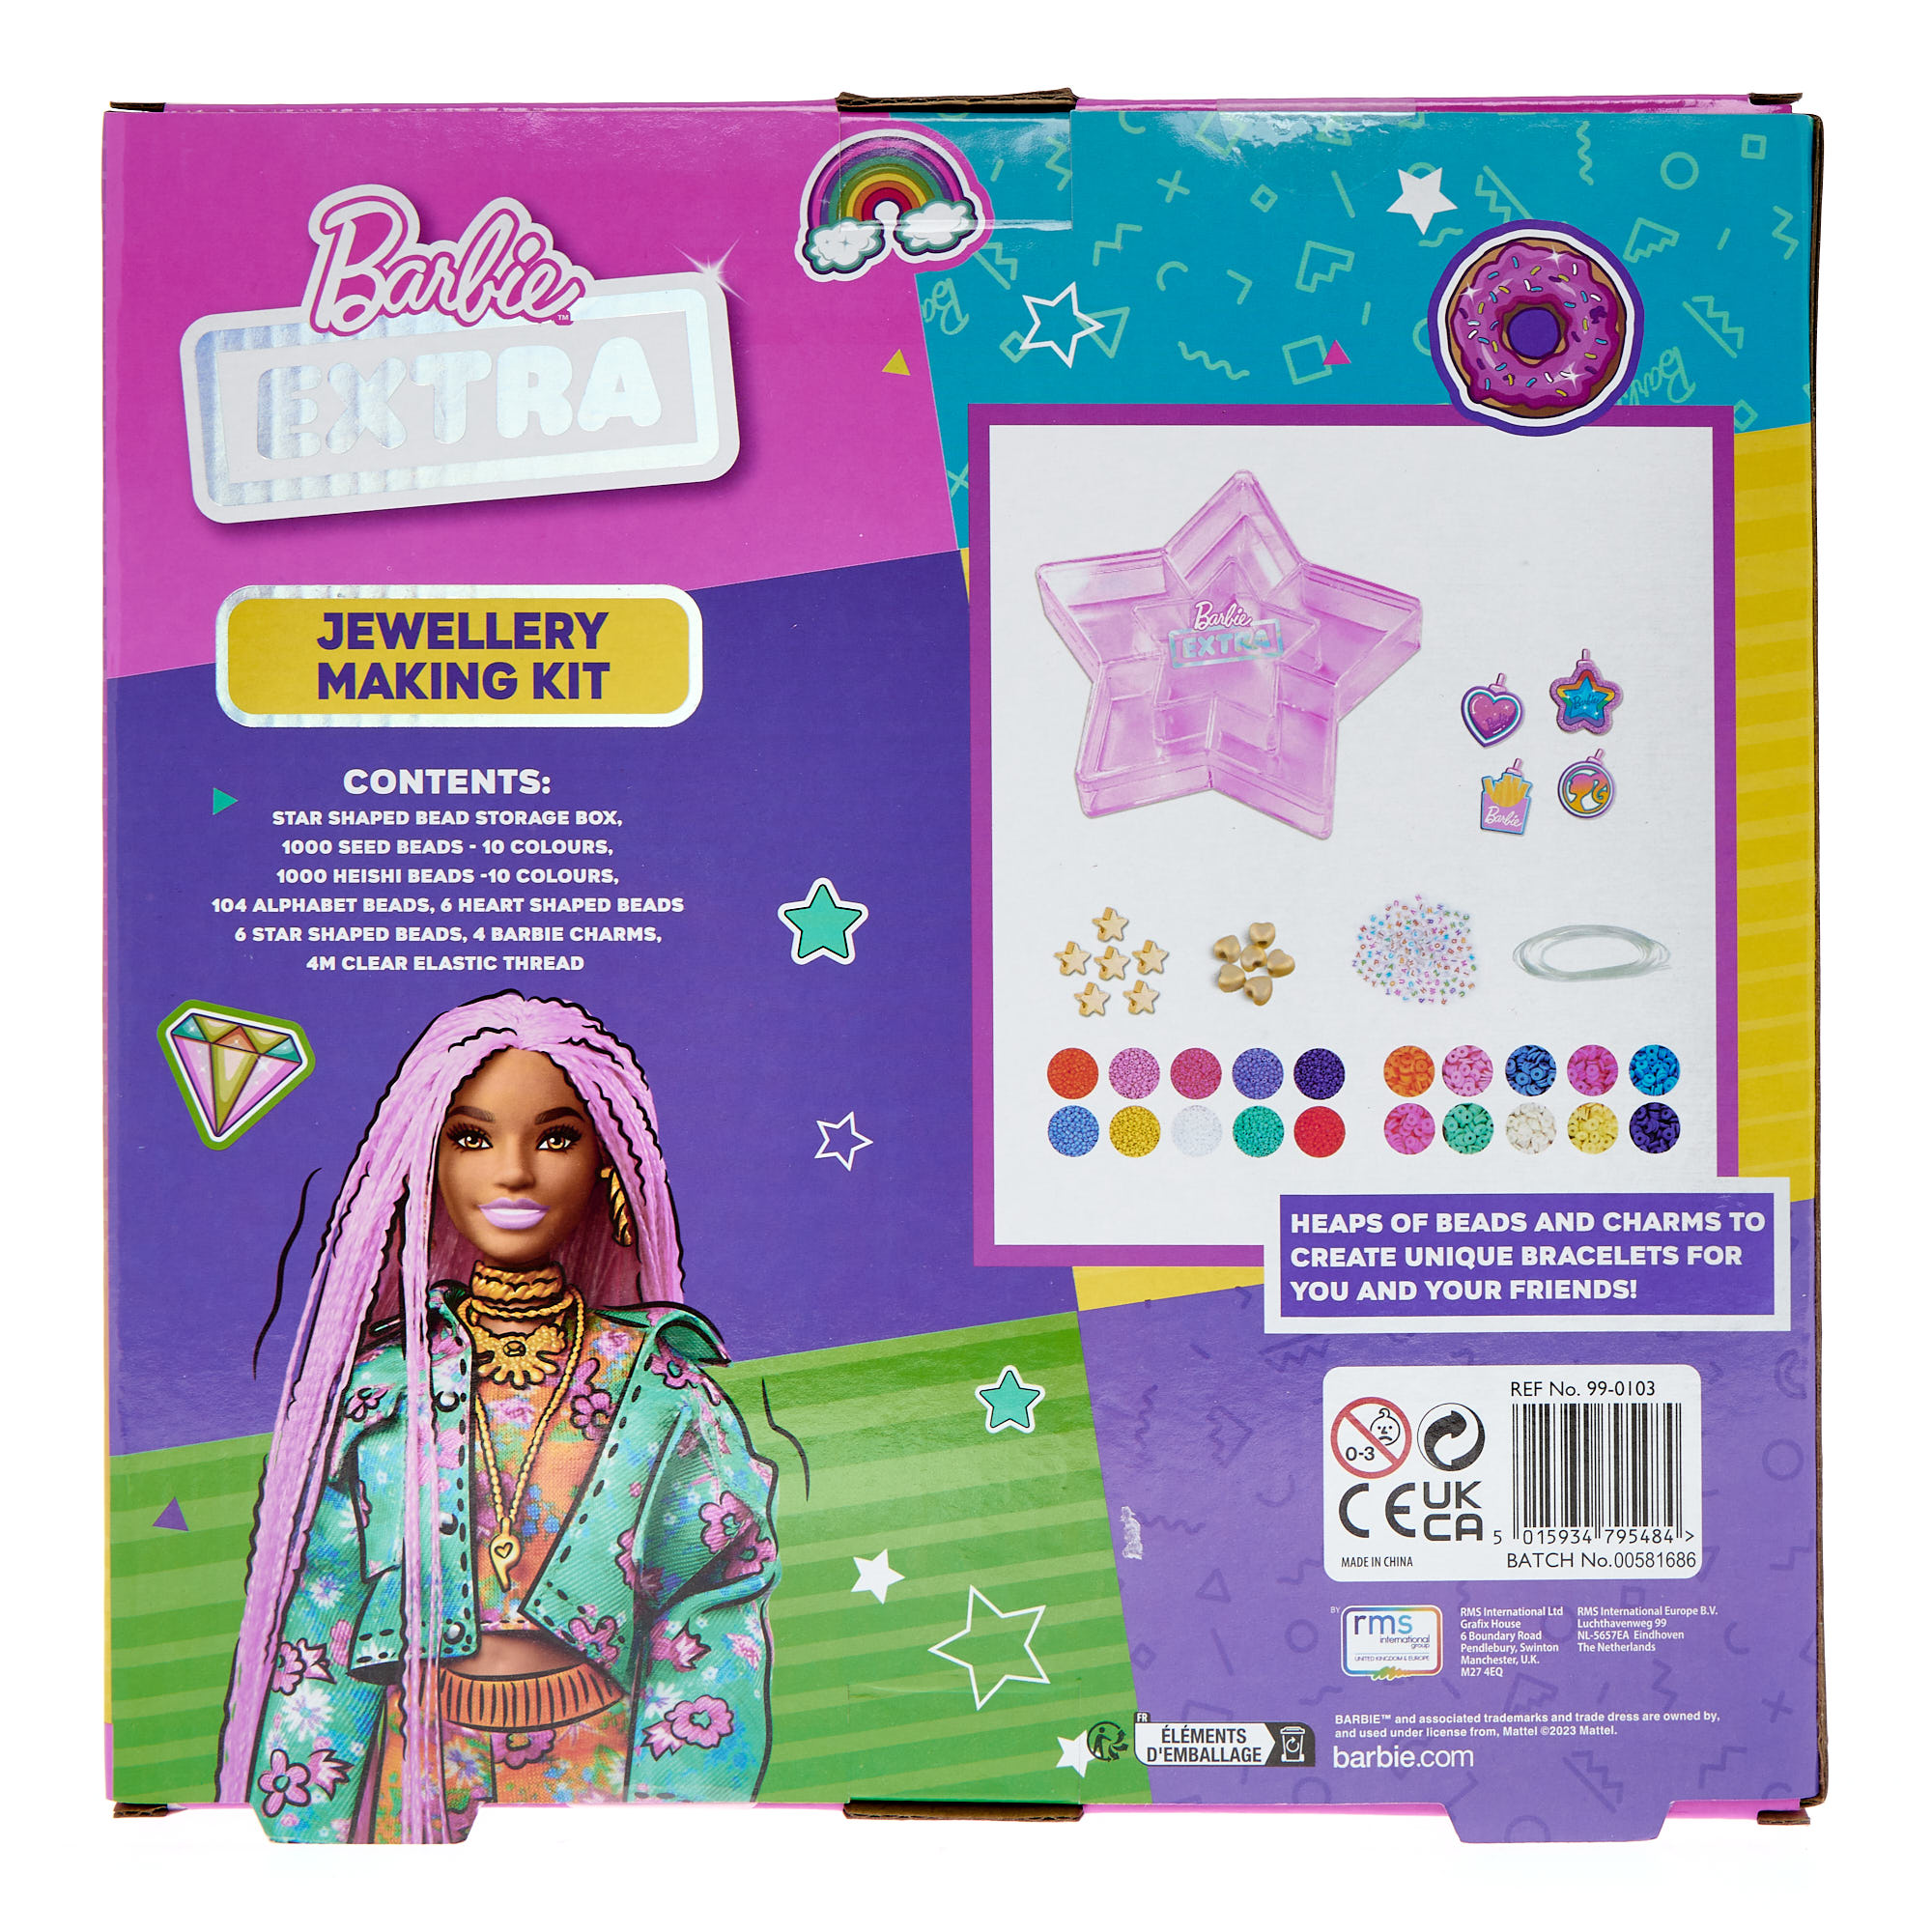 Barbie Extra Jewellery Making Kit